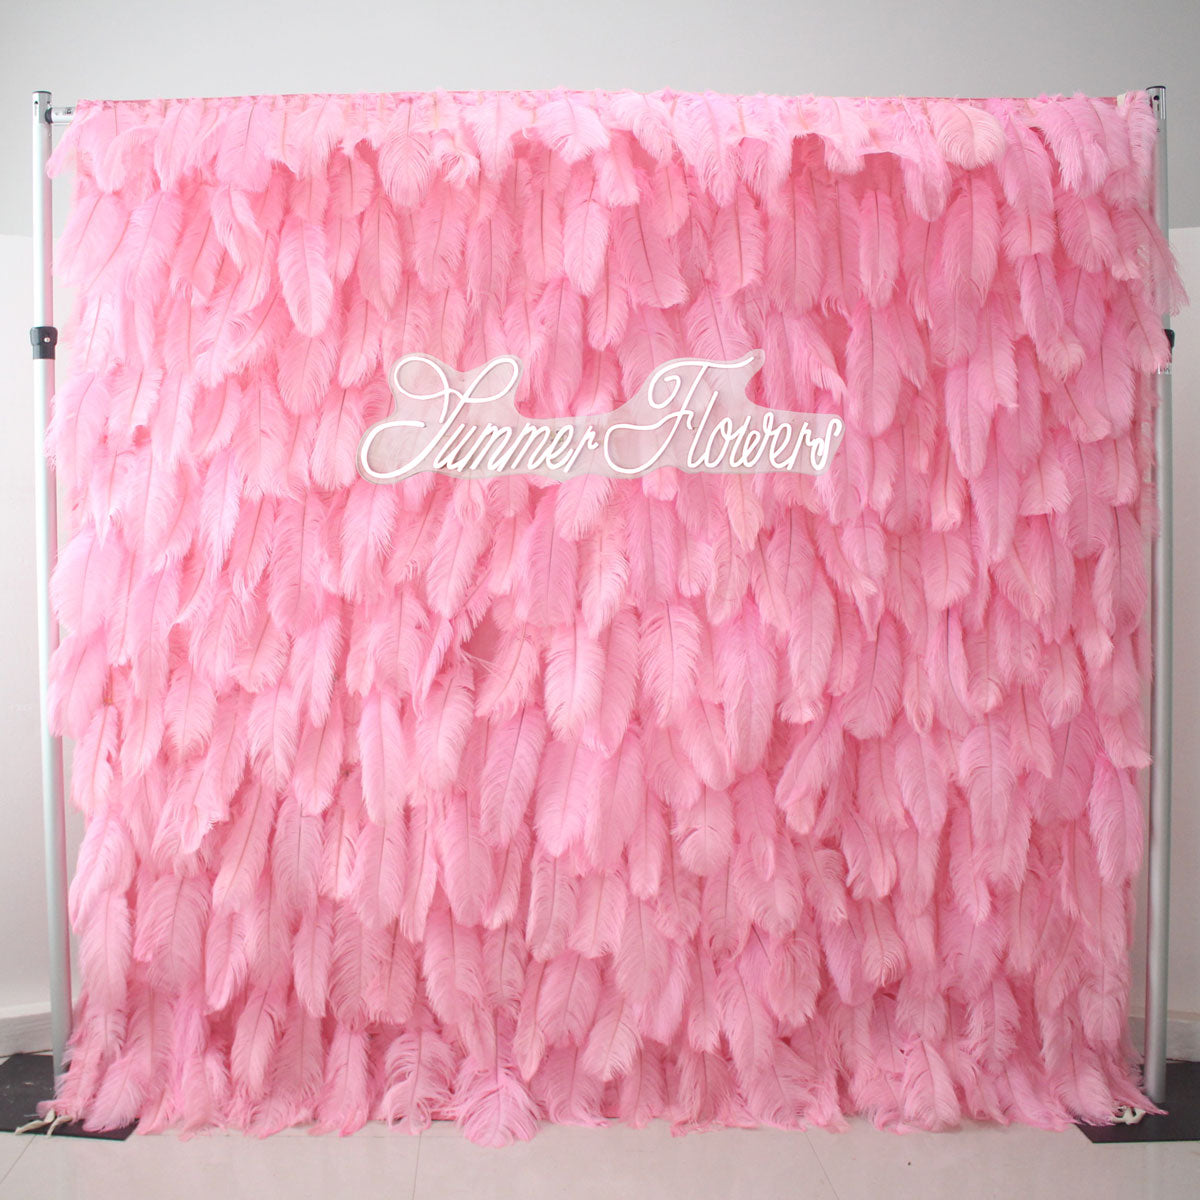 Summer Flower:CB-164-2 8ft*8ft Cloth Back Artificial Flower Wall Backdrop